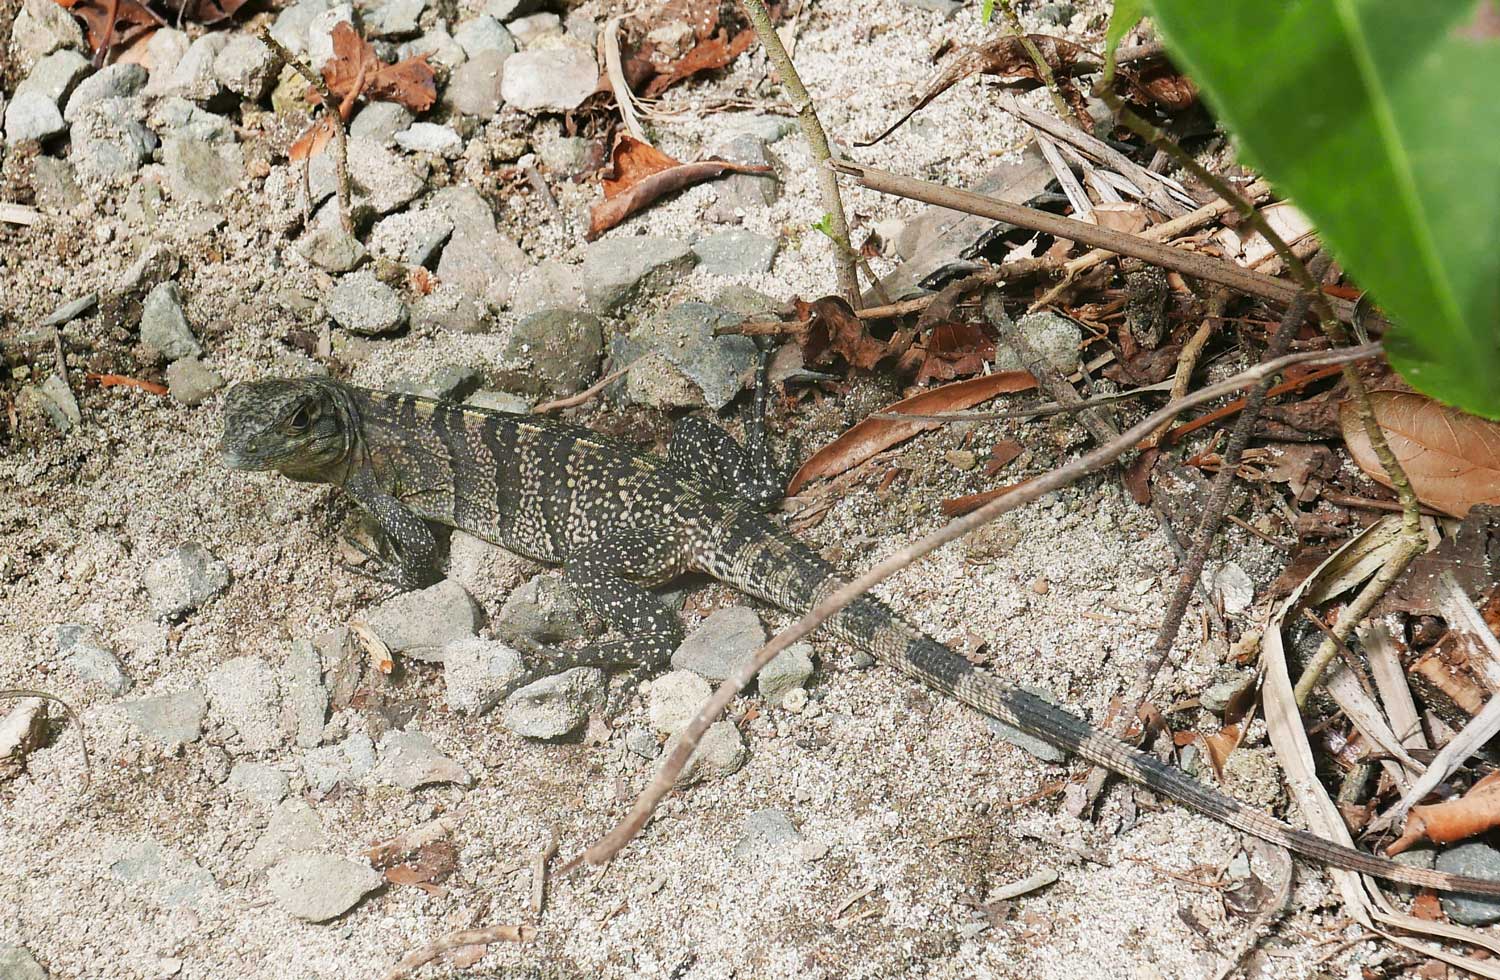 One of many iguanas in Manuel Antonio national park